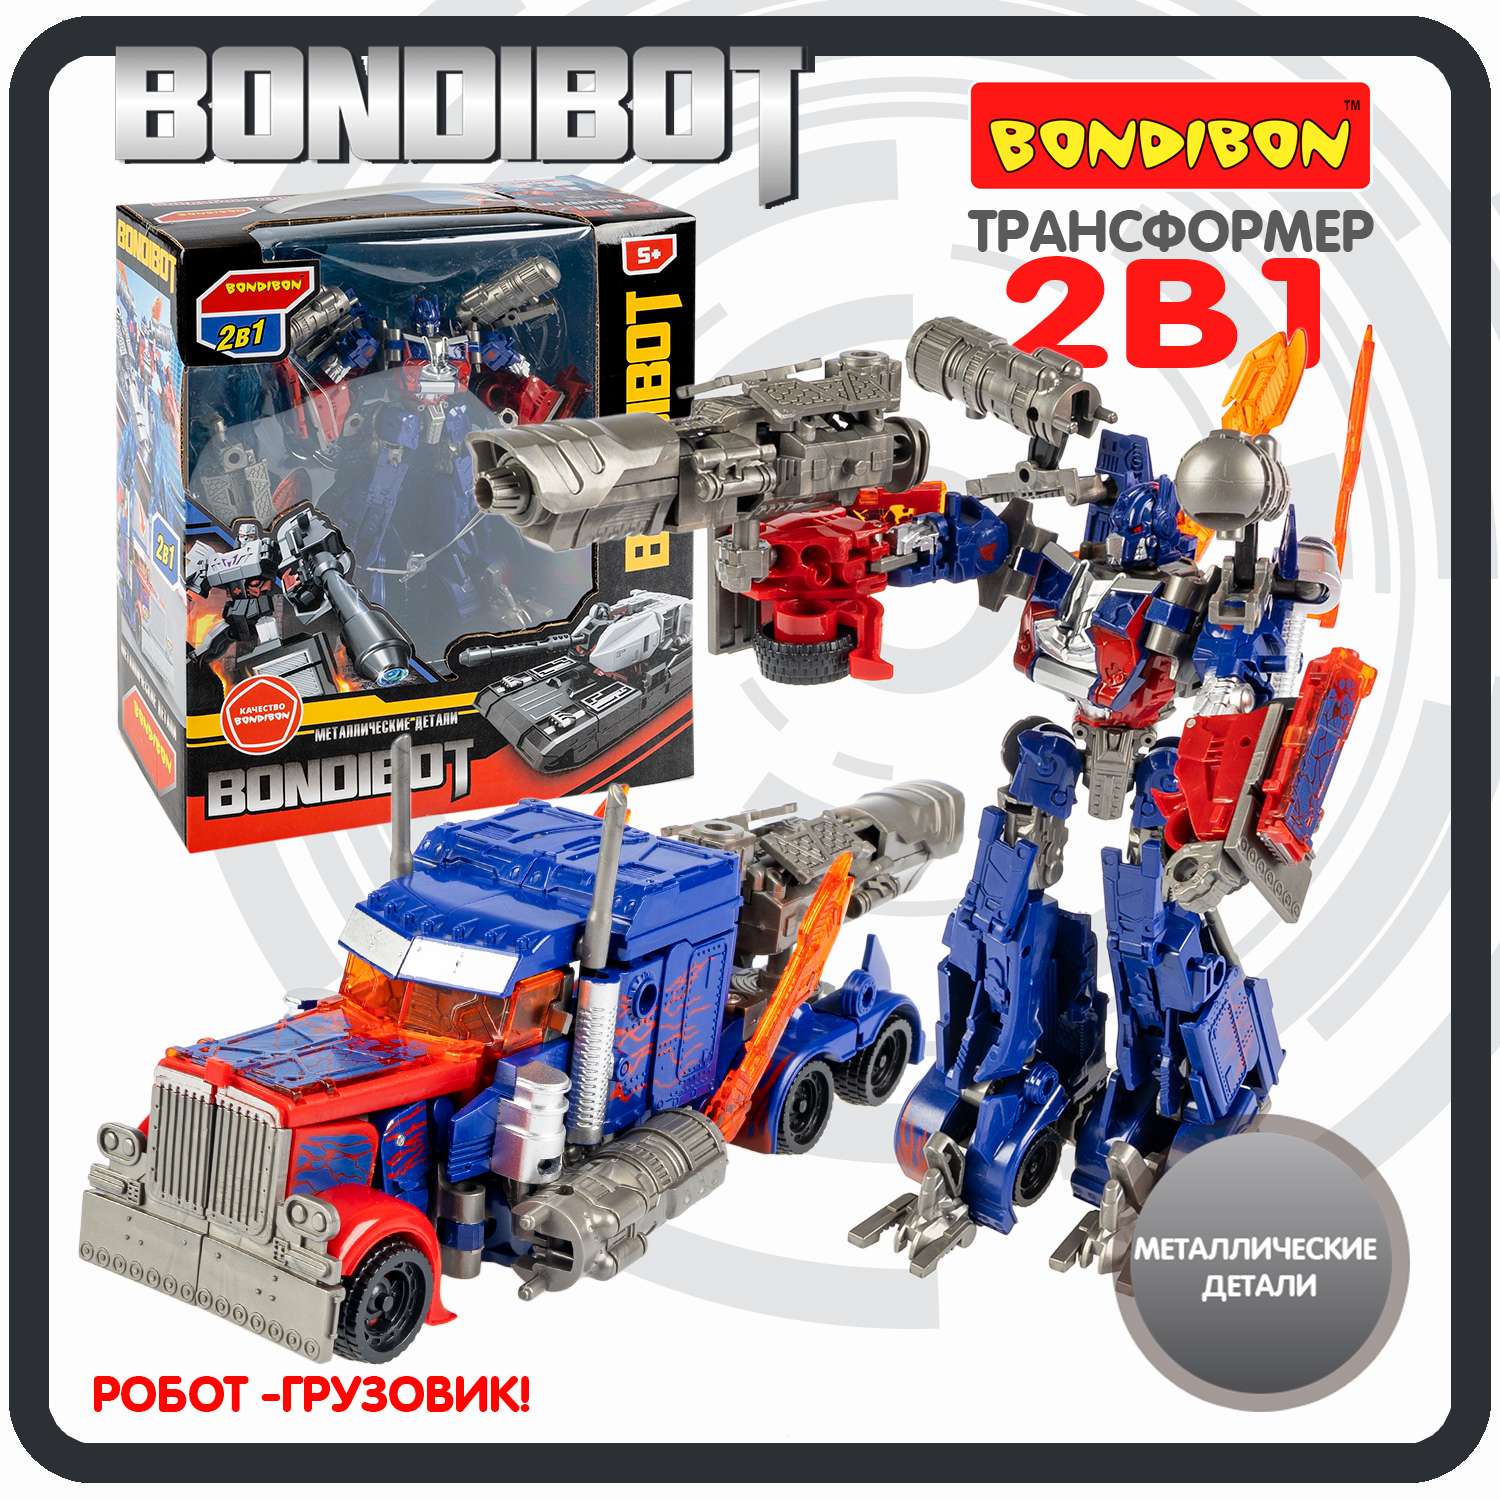 Трансформер 2в1 BONDIBOT Bondibon, ВОХ 24x27,8x10 см, метал, детали, робот-грузовик, арт,